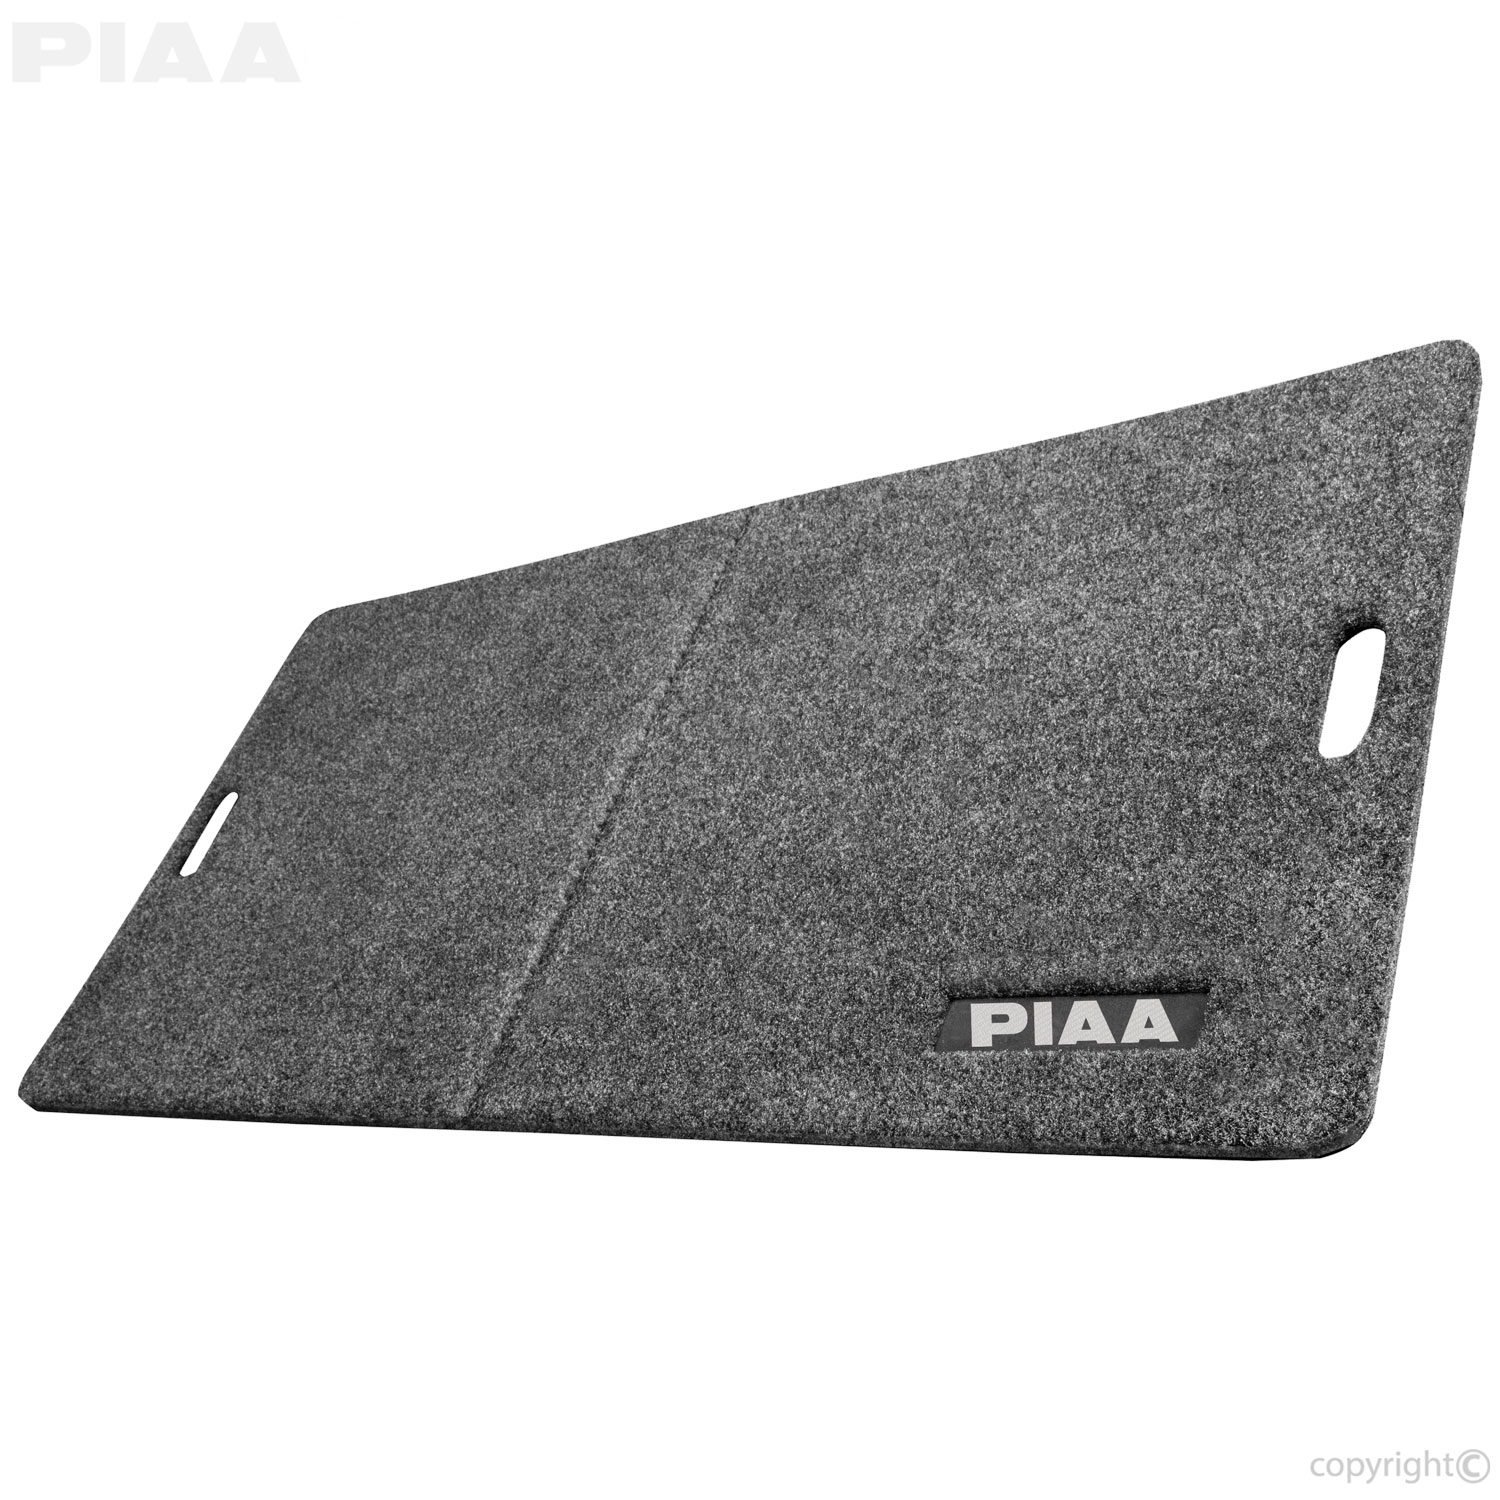 https://www.piaa.com/resize/Shared/Images/Product/PIAA-Mechanic-Mat/piaa-ap-mm-blk-mechanic-mat.jpg?bw=1000&w=1000&bh=1000&h=1000